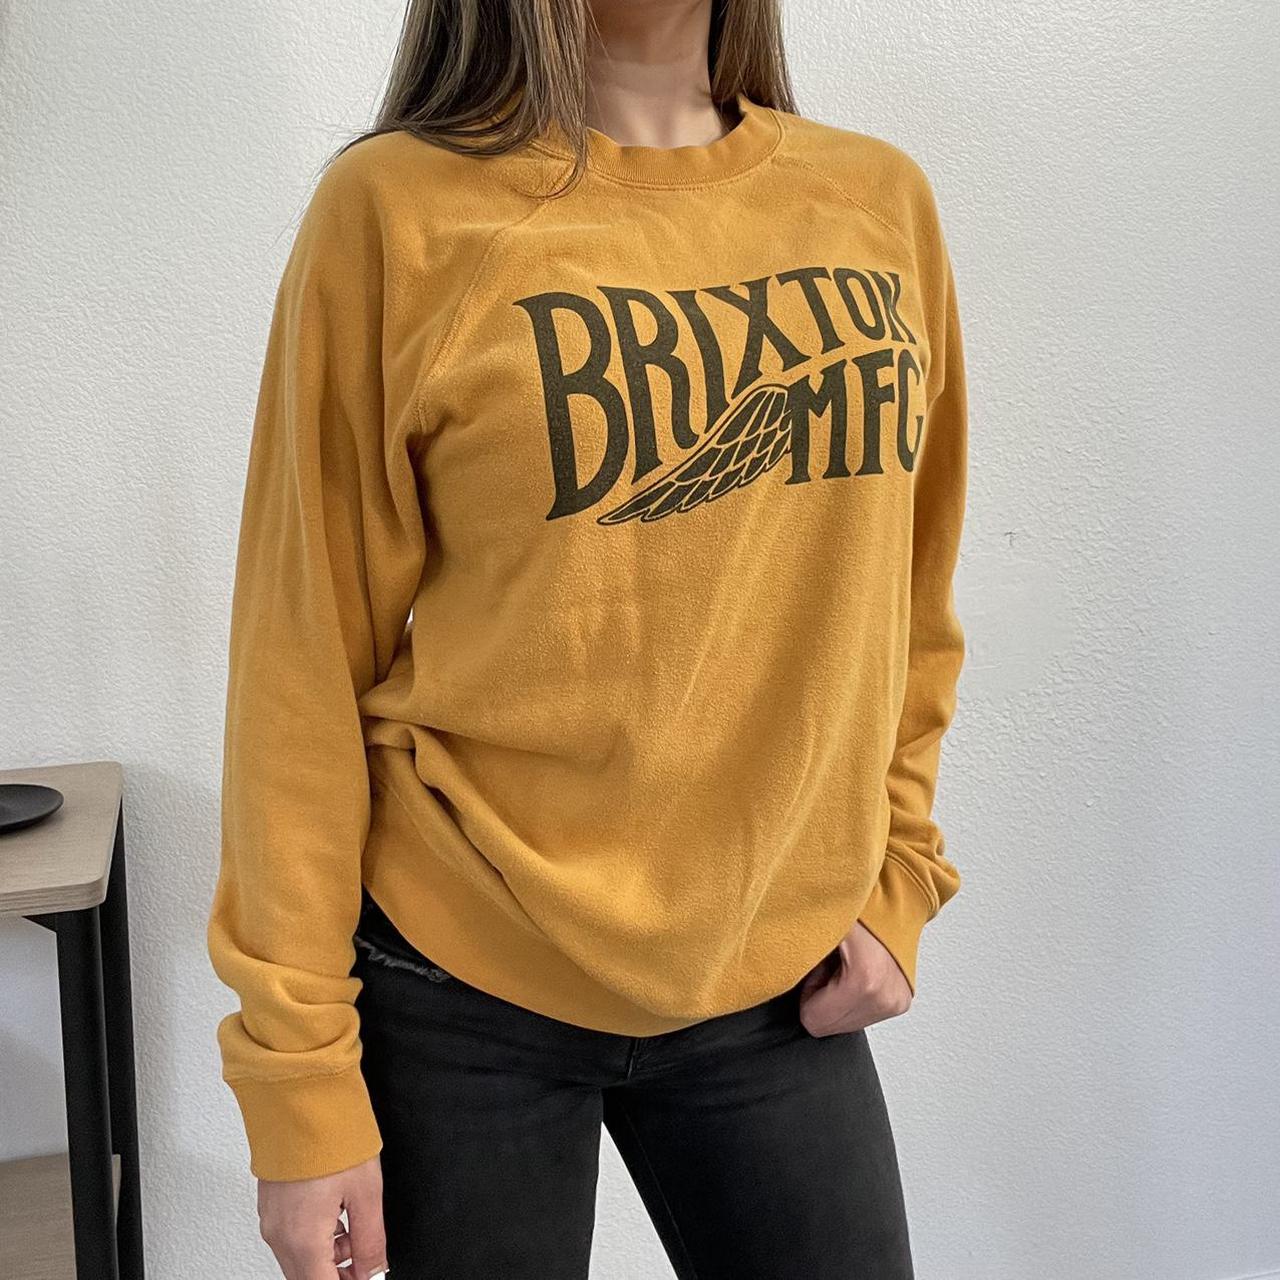 Brixton Women's Yellow Sweatshirt (3)